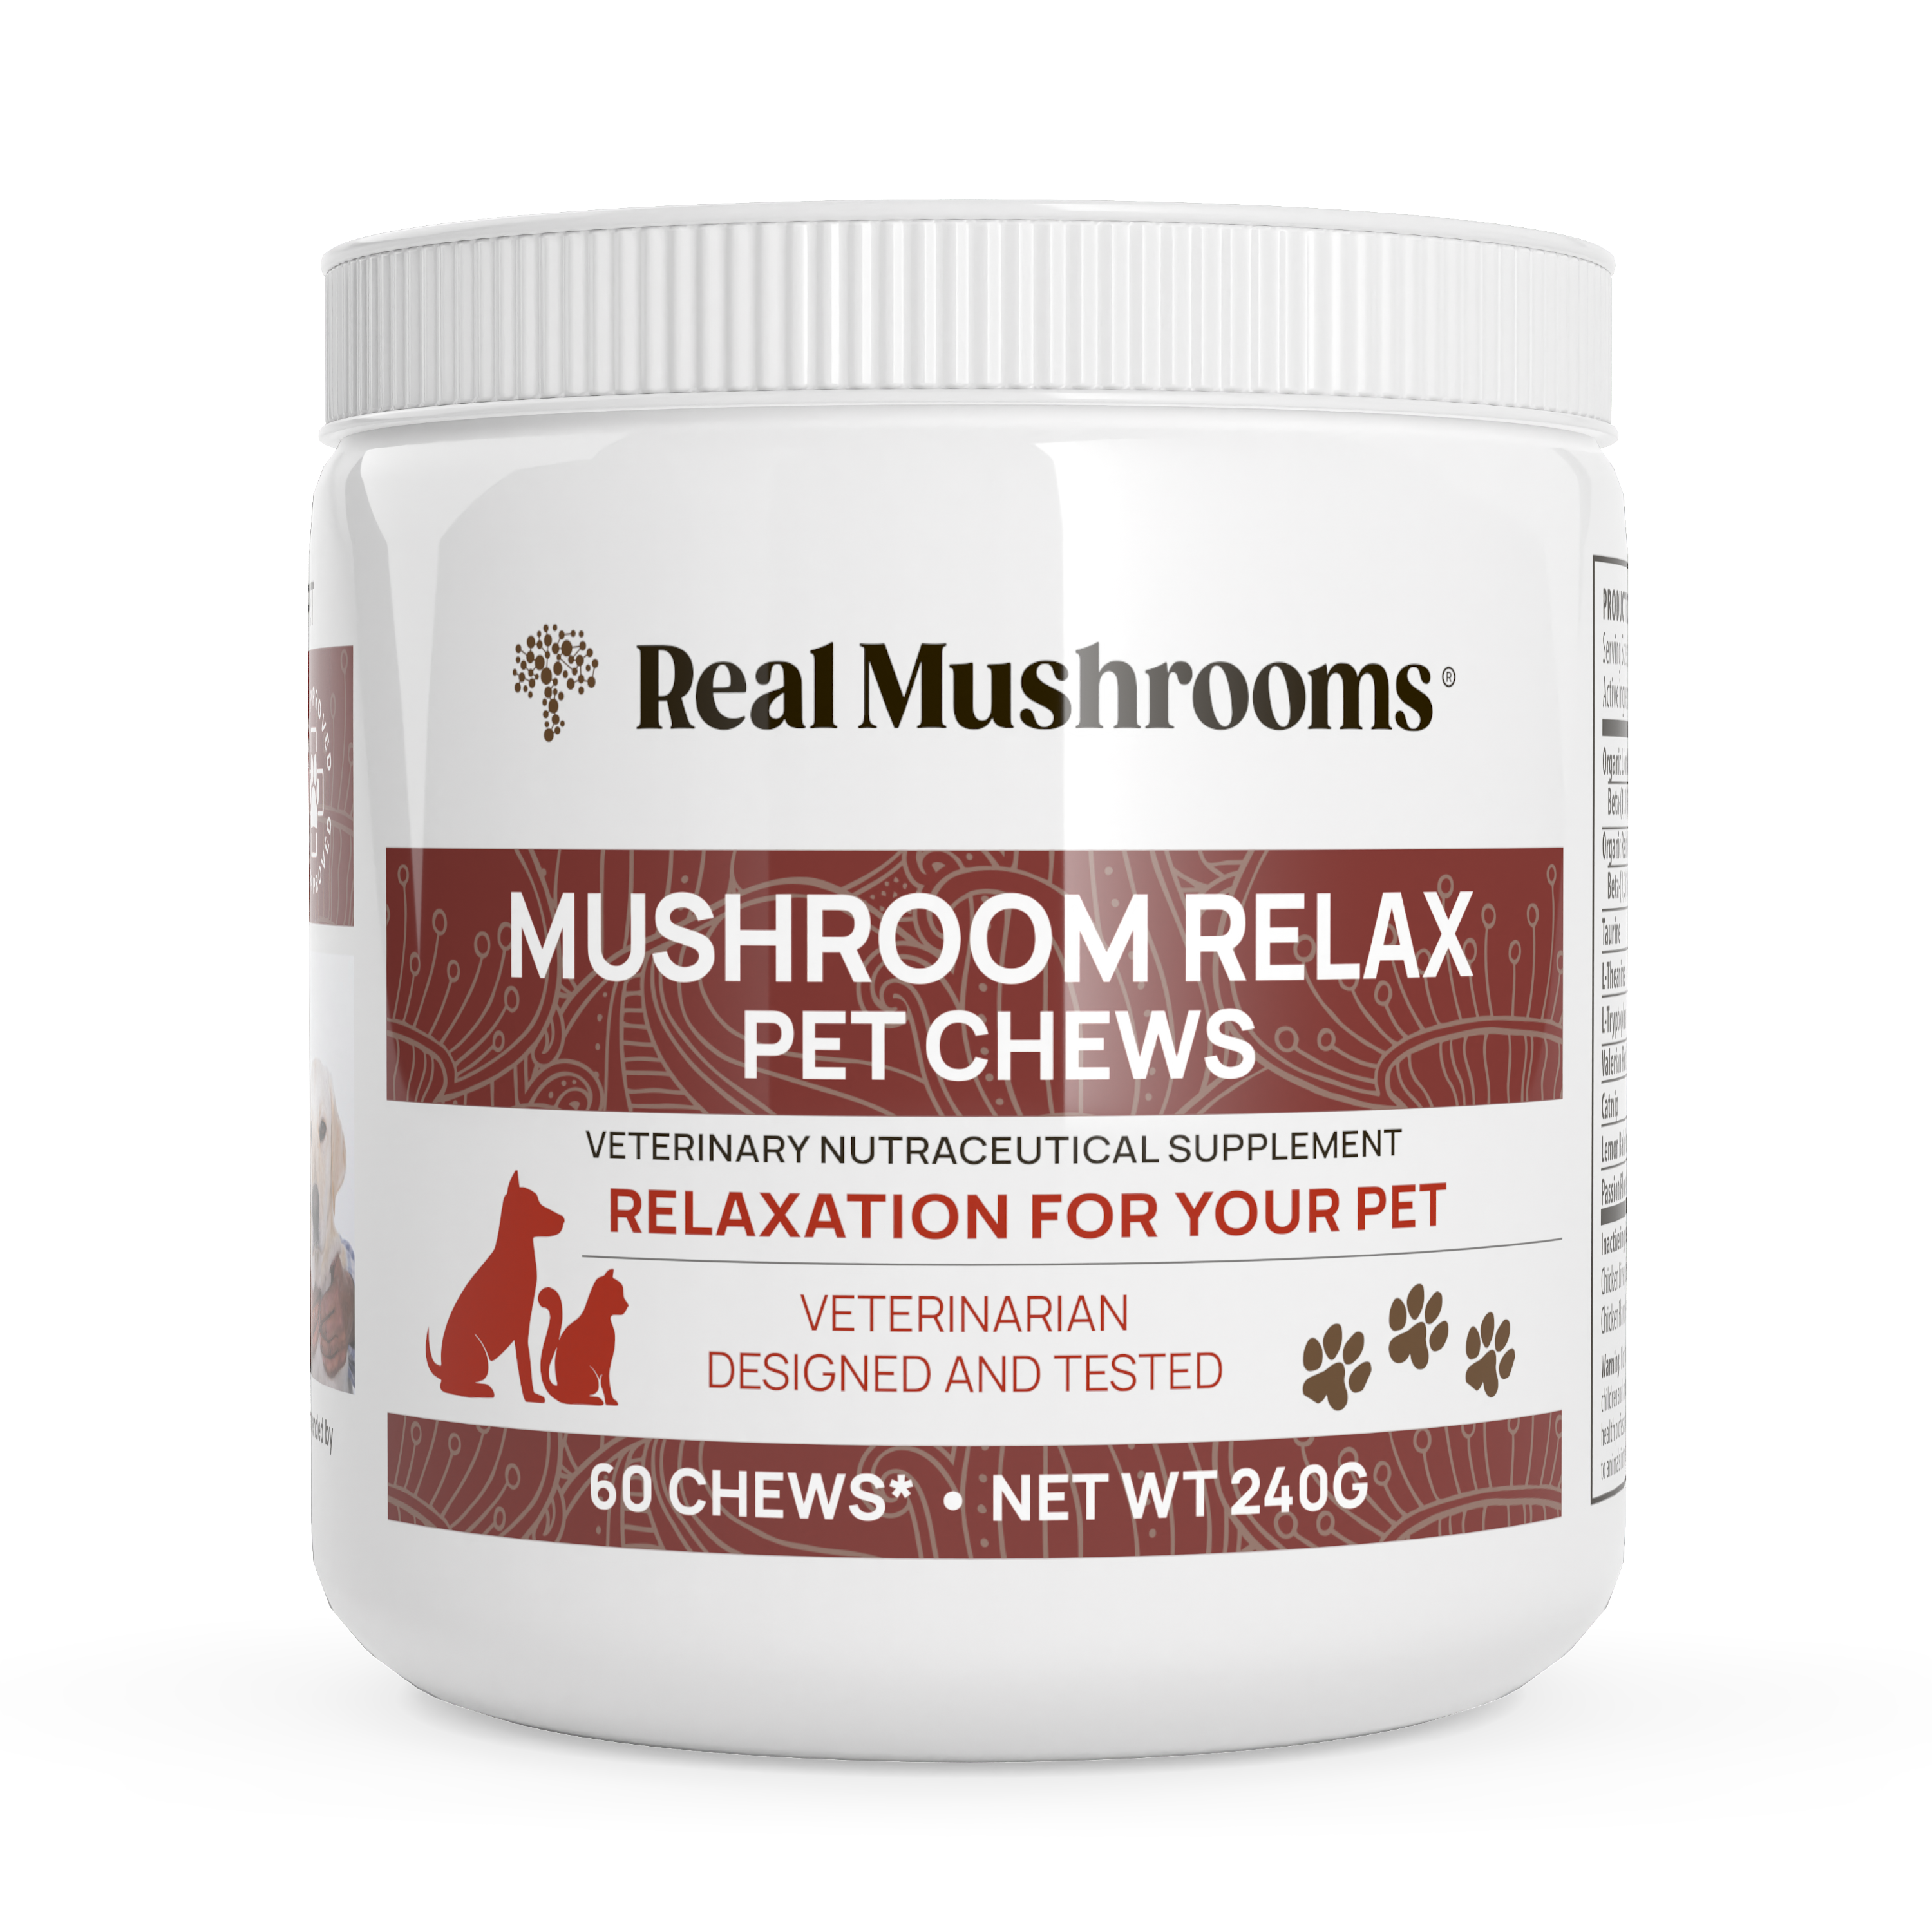 Mushroom Relax Pet Chews